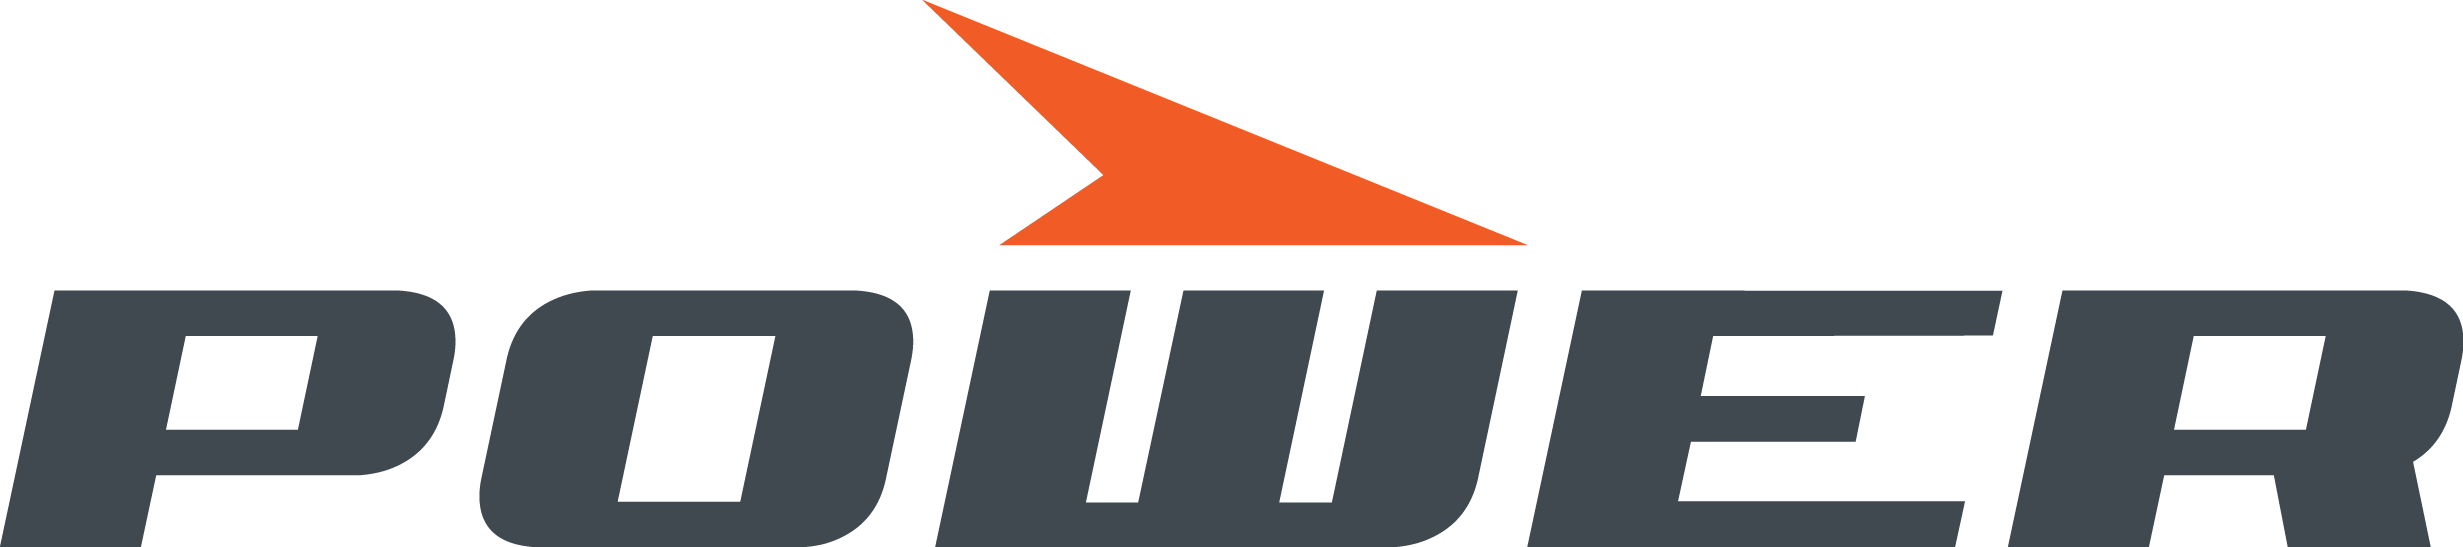 logo power